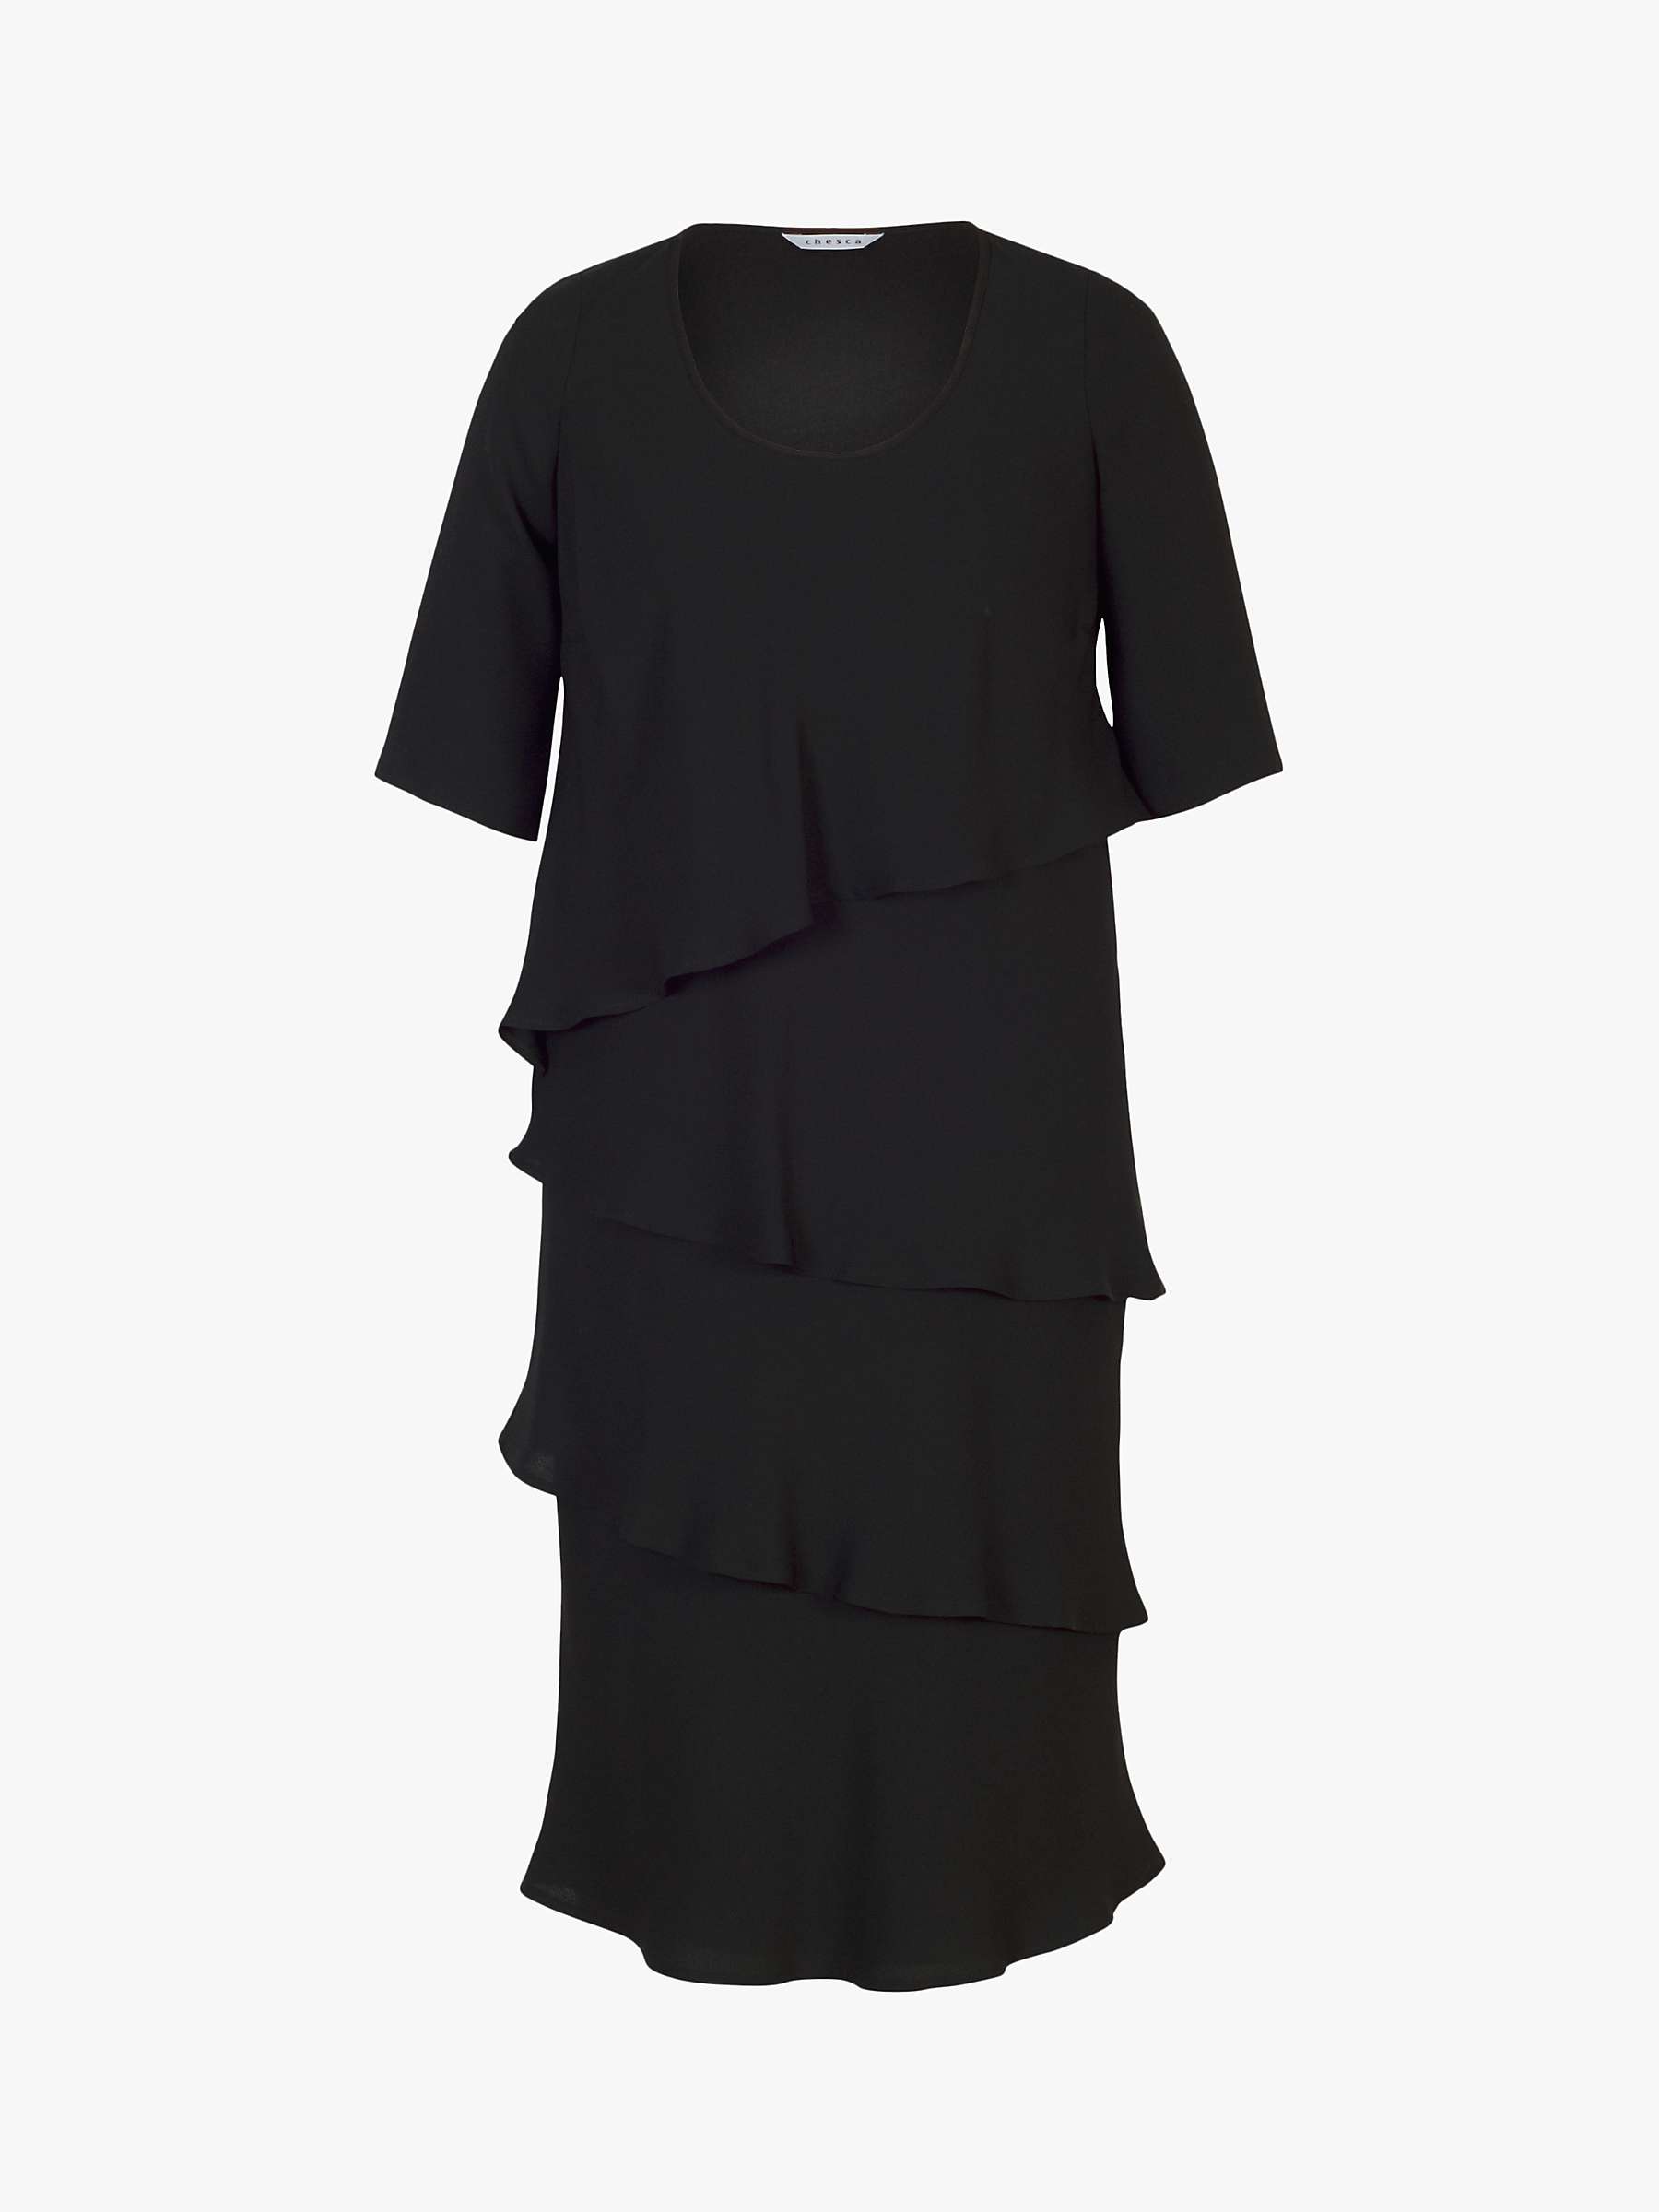 chesca Layered Knee Length Dress, Black at John Lewis & Partners